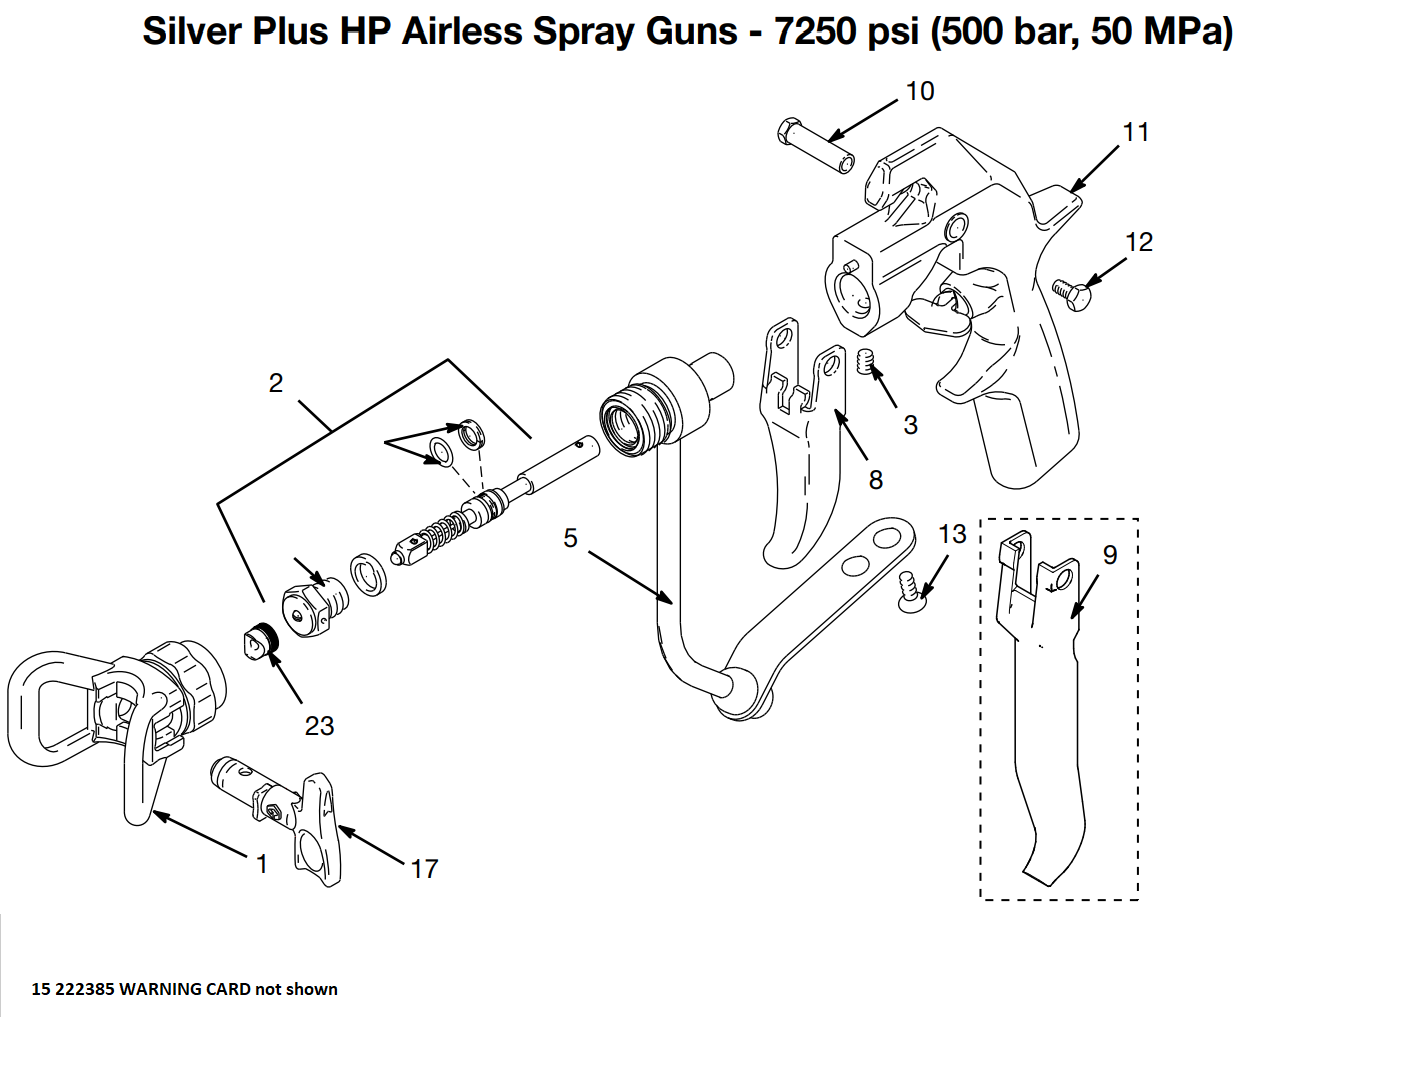 Graco ProContractor Silver Plus HP Airless Spray Gun